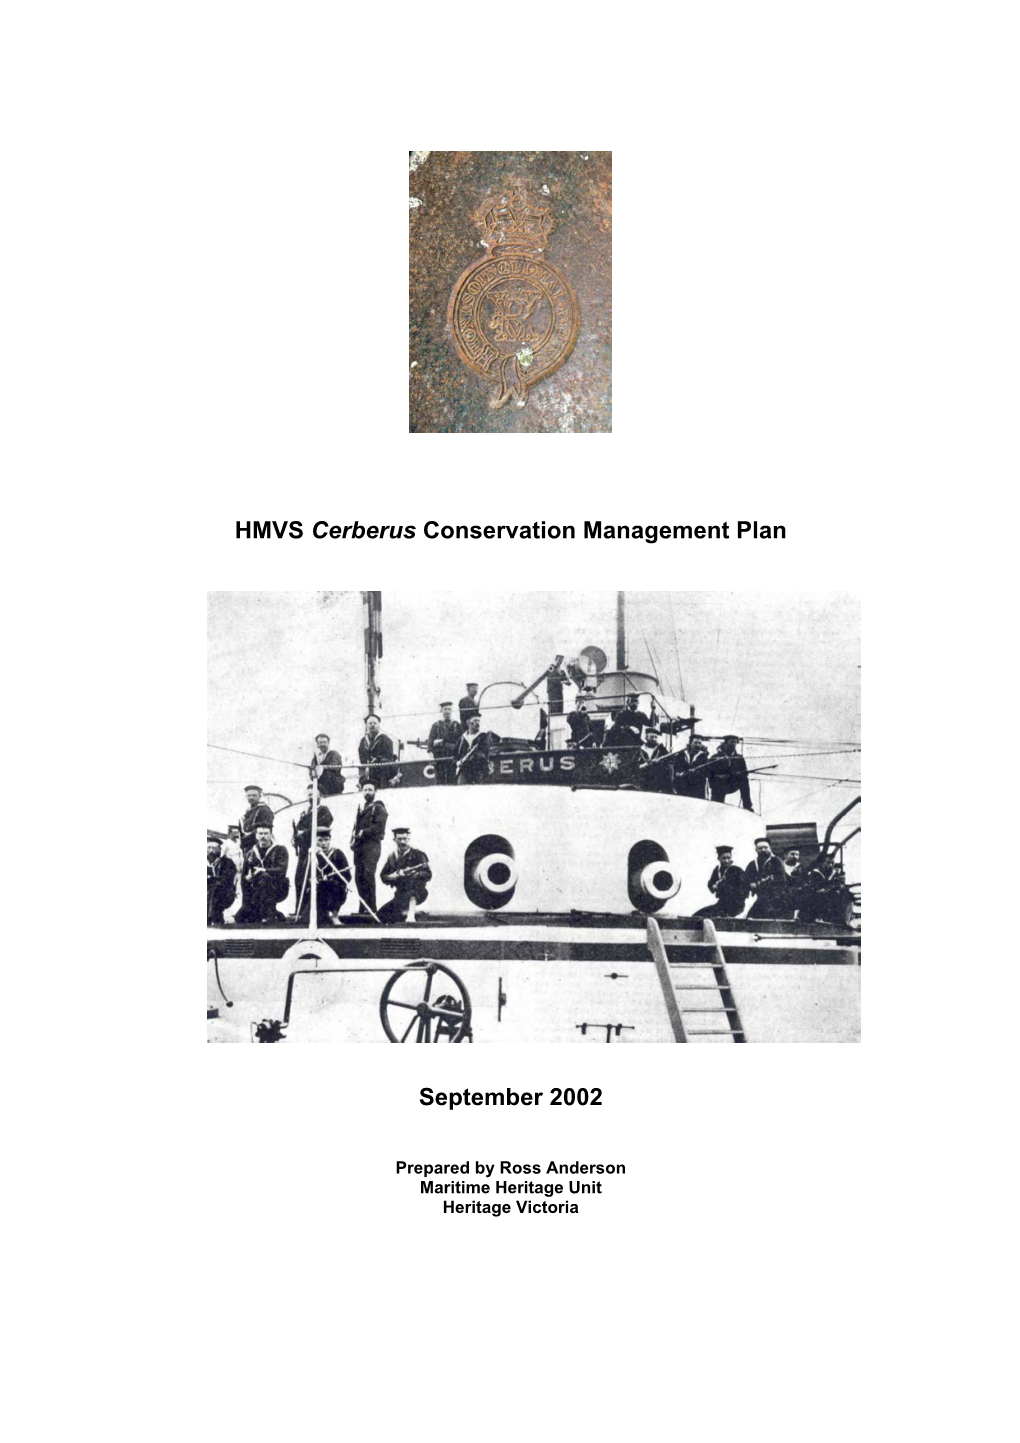 HMVS Cerberus Conservation Management Plan September 2002